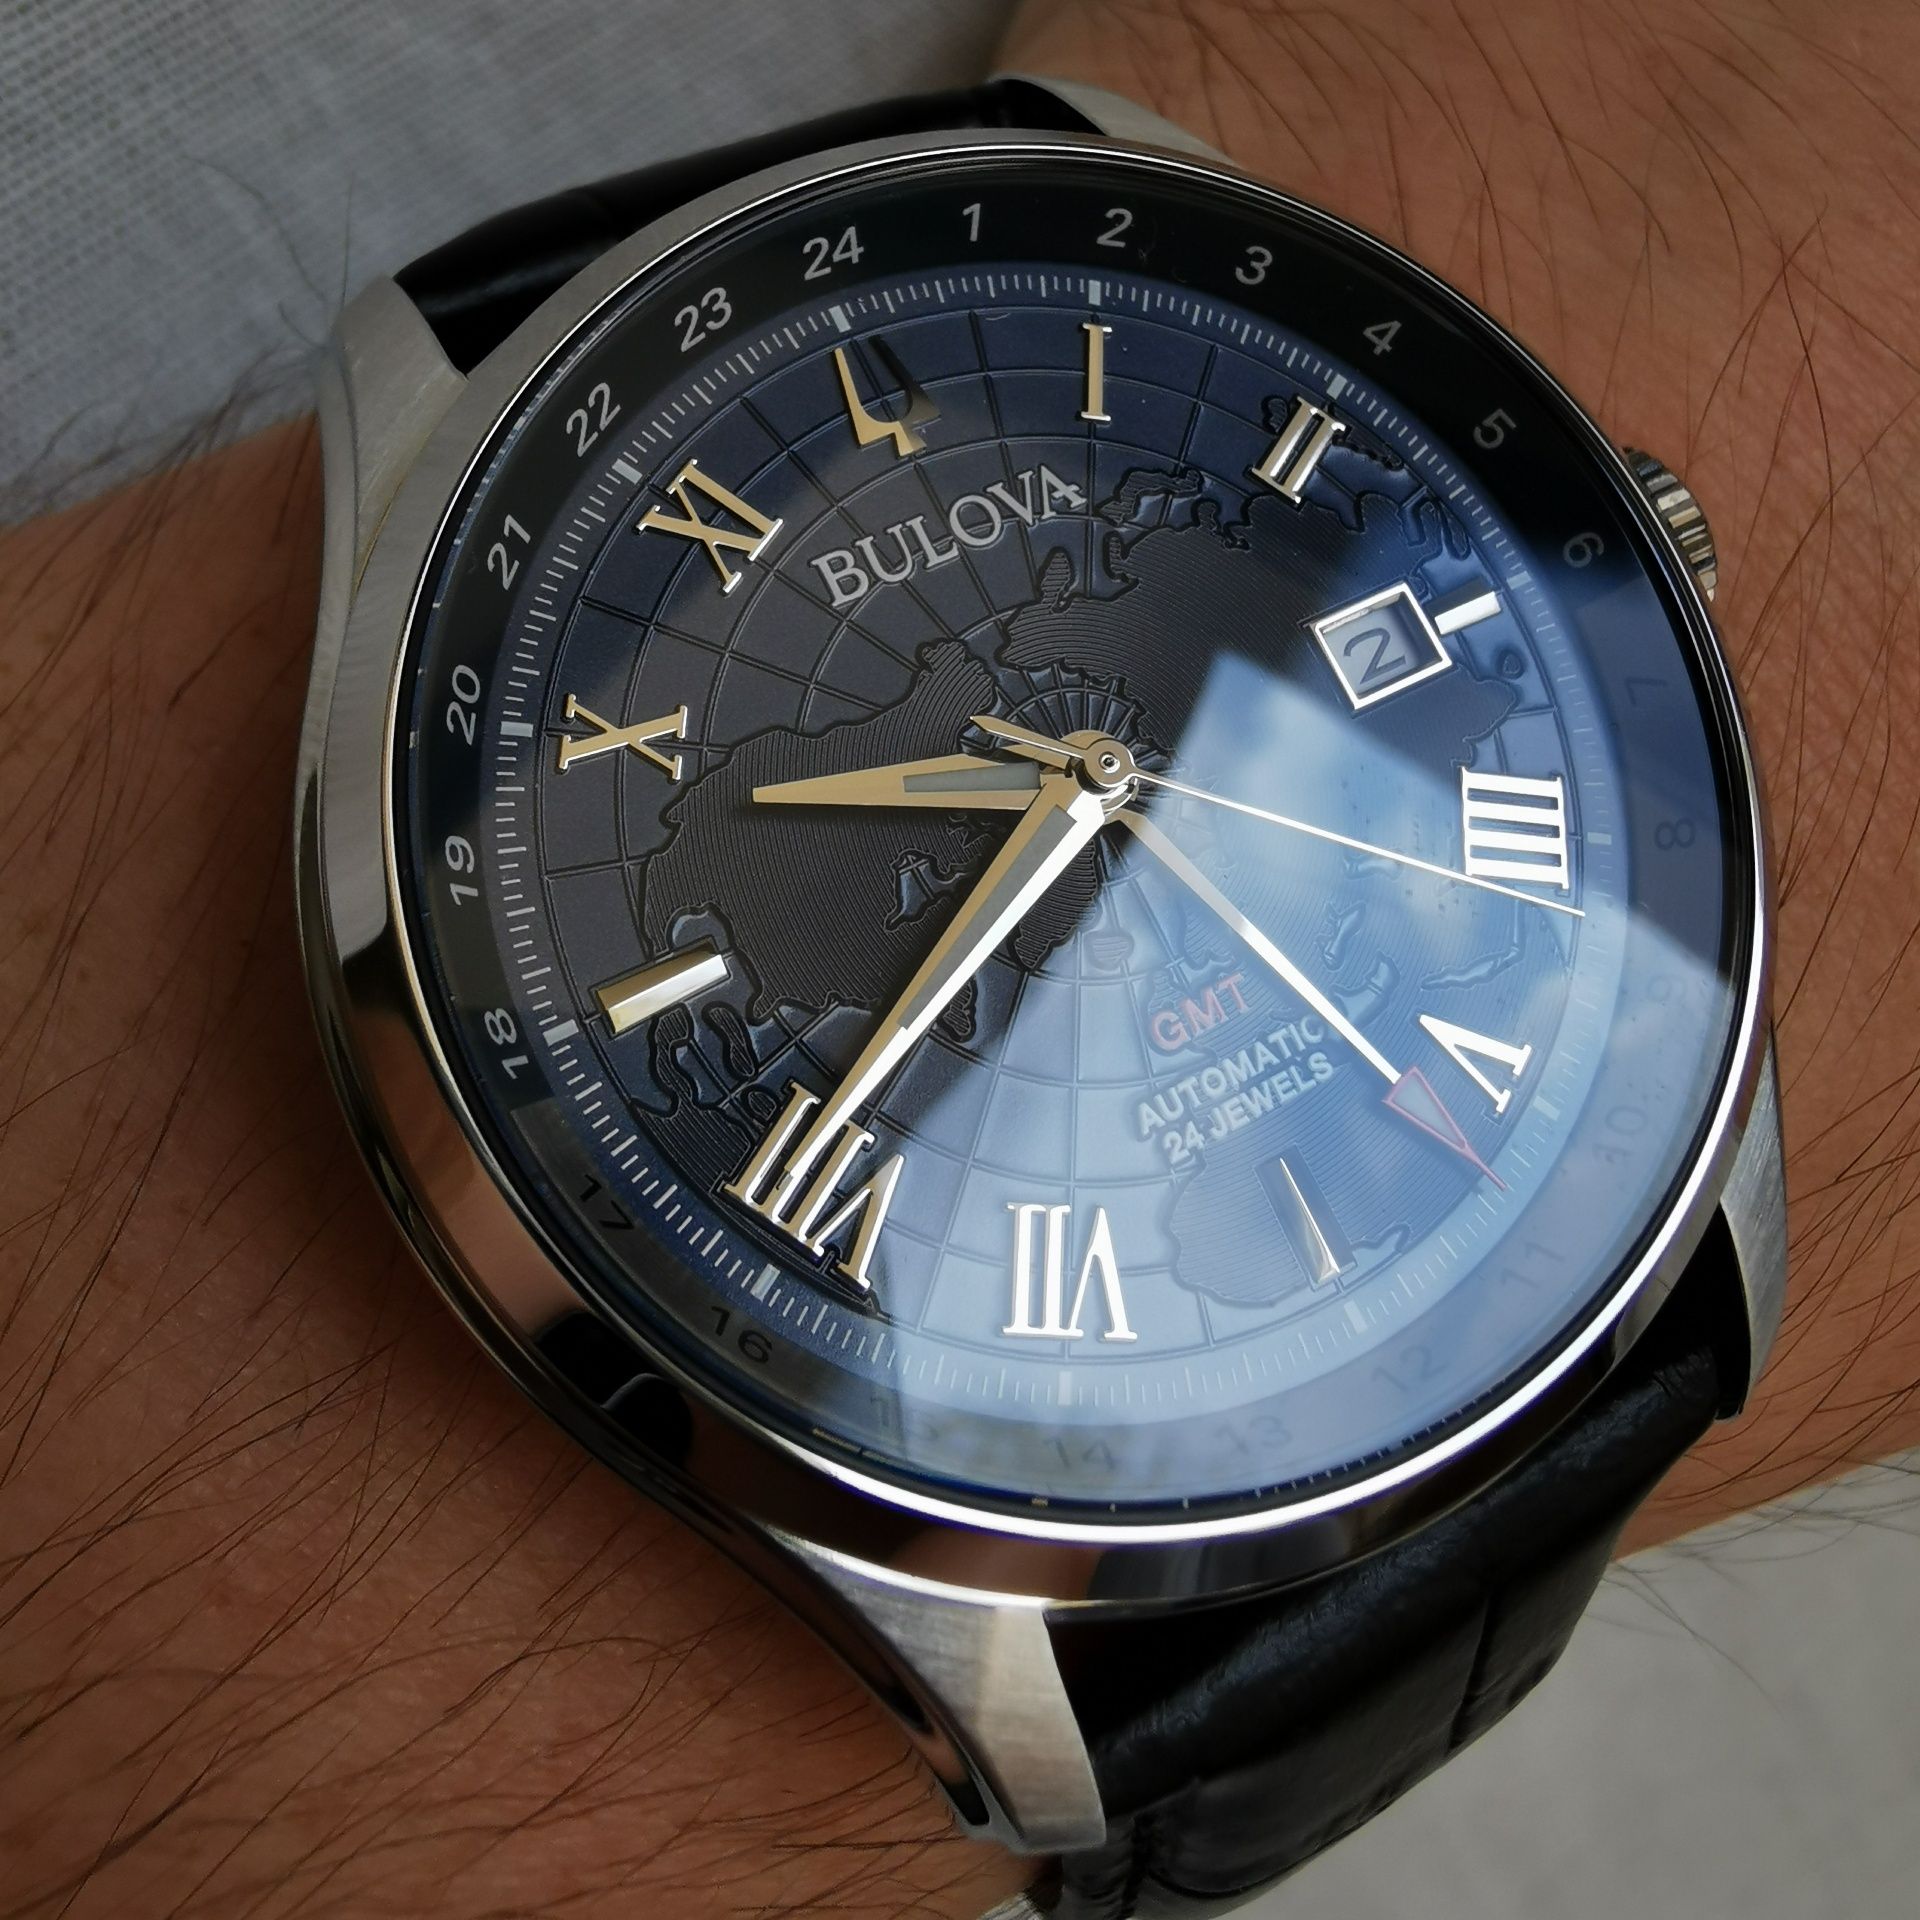 Zegarek Bulova Wilton GMT druga strefa czasowa najnowszy model